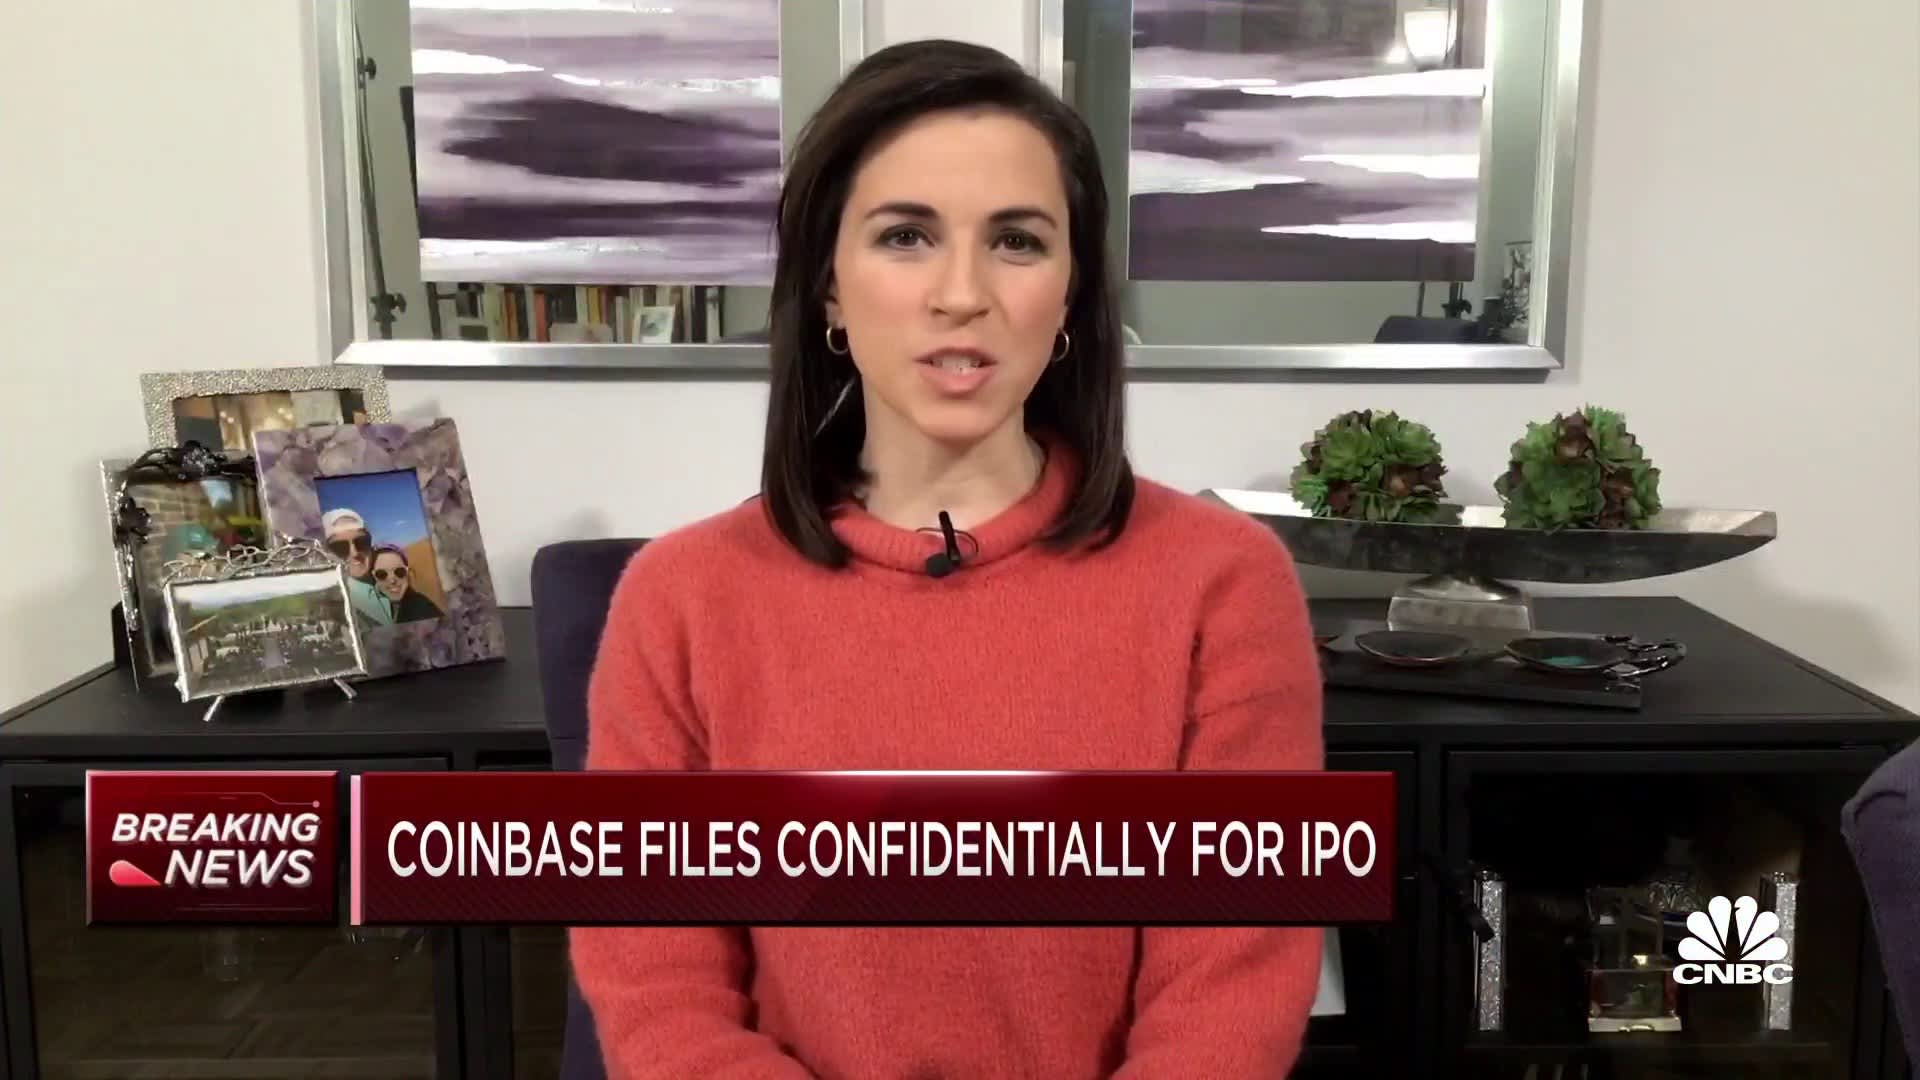 Coinbase confidentially files for IPO